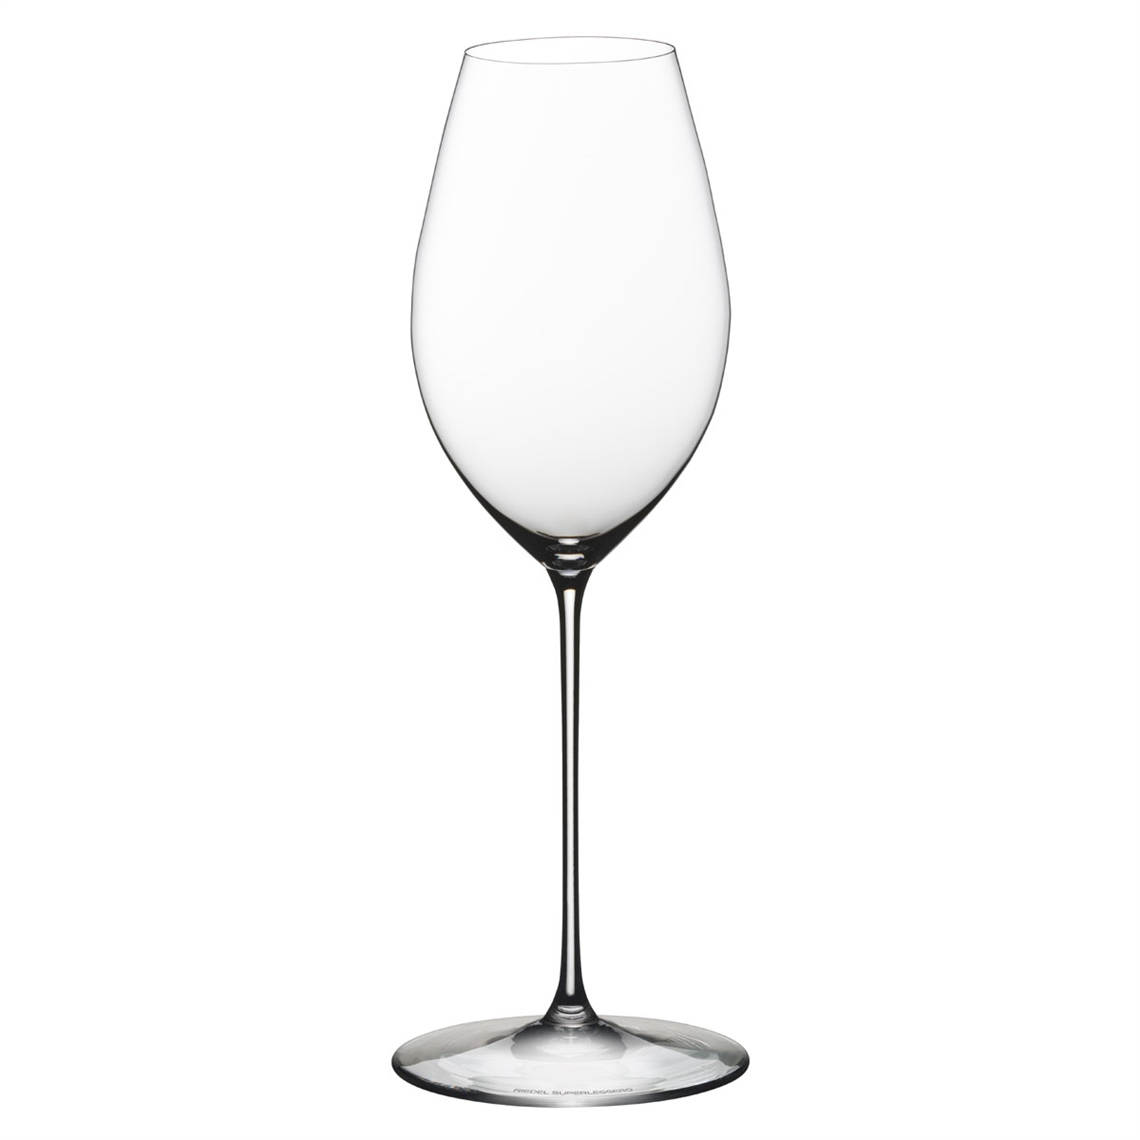 Riedel Superleggero Sauvignon Blanc White Wine Glass - 6425/33